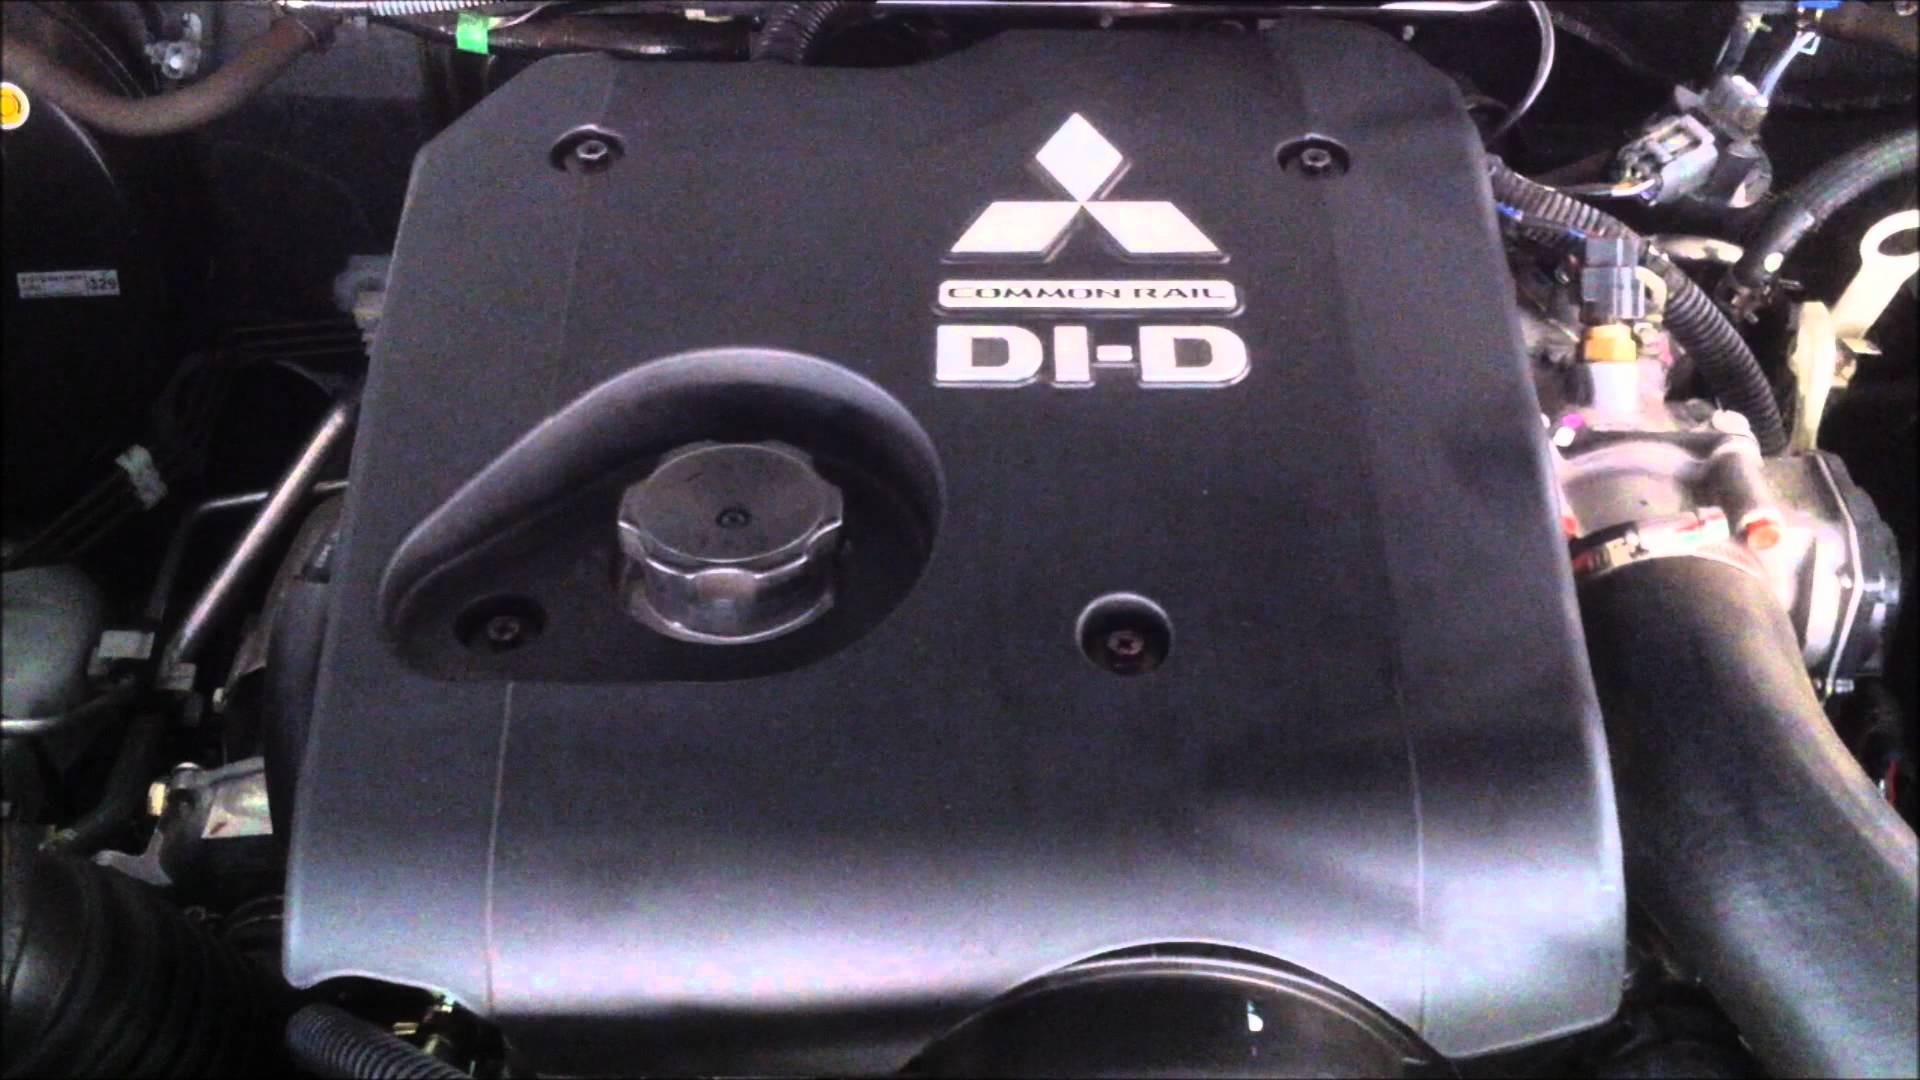 Mitsubishi Engine Diagram Mitsubishi Tritan Di D 4cyl 2 5l Diesel Turbo F Inj Motor Of Mitsubishi Engine Diagram